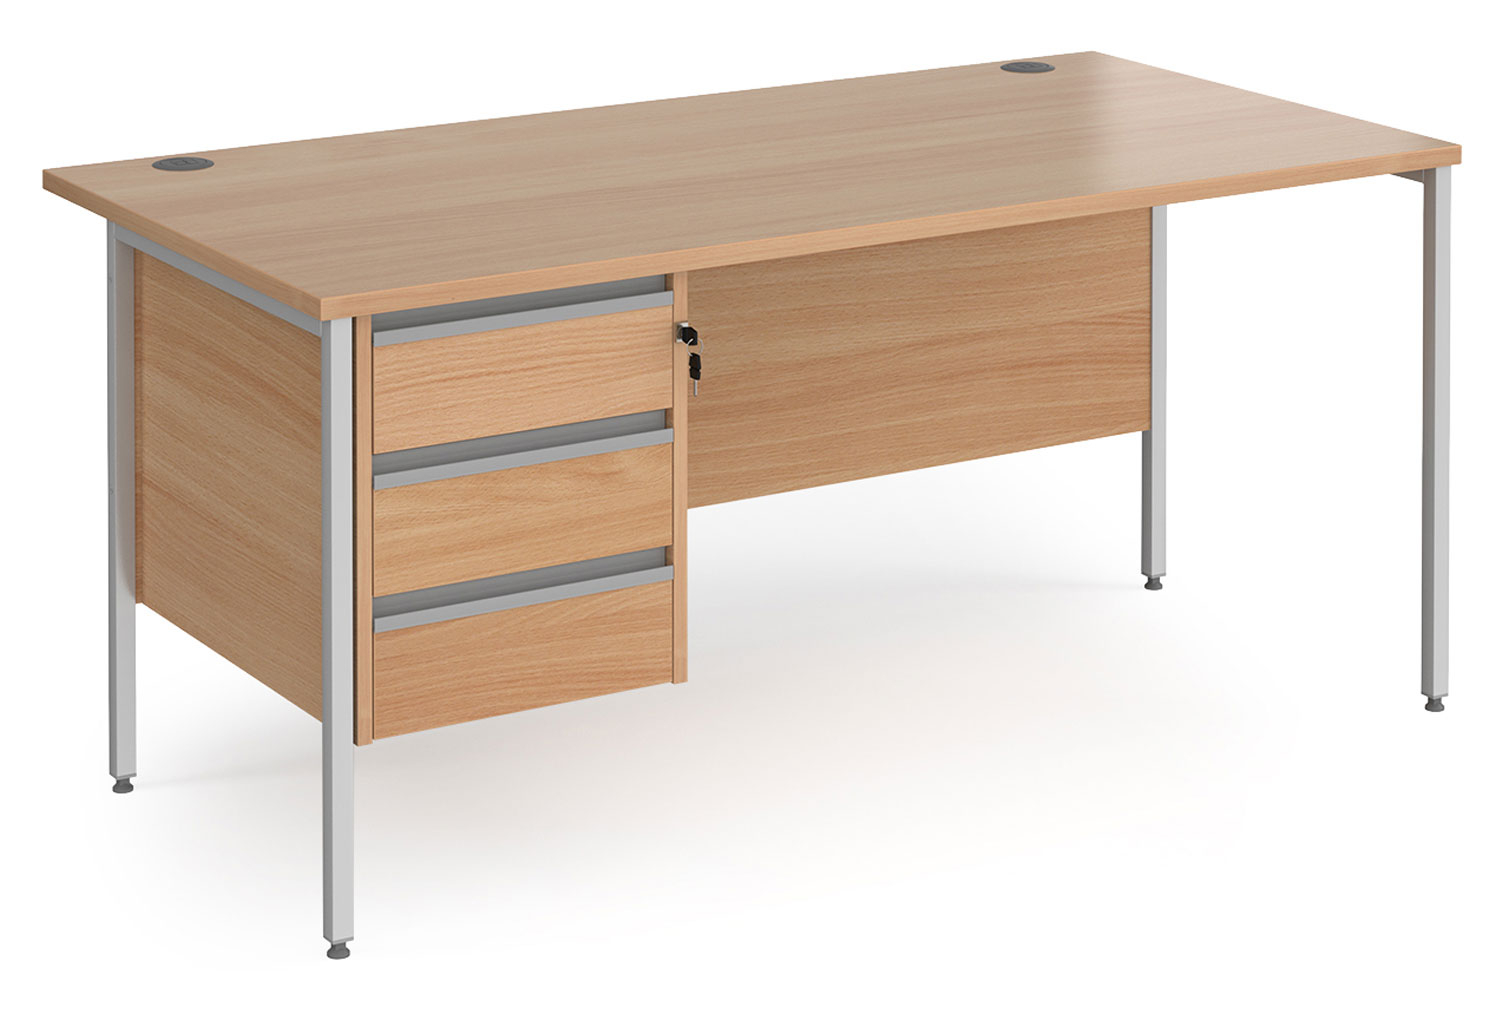 Value Line Classic+ Rectangular H-Leg Office Desk 3 Drawers (Silver Leg), 160wx80dx73h (cm), Beech, Express Delivery